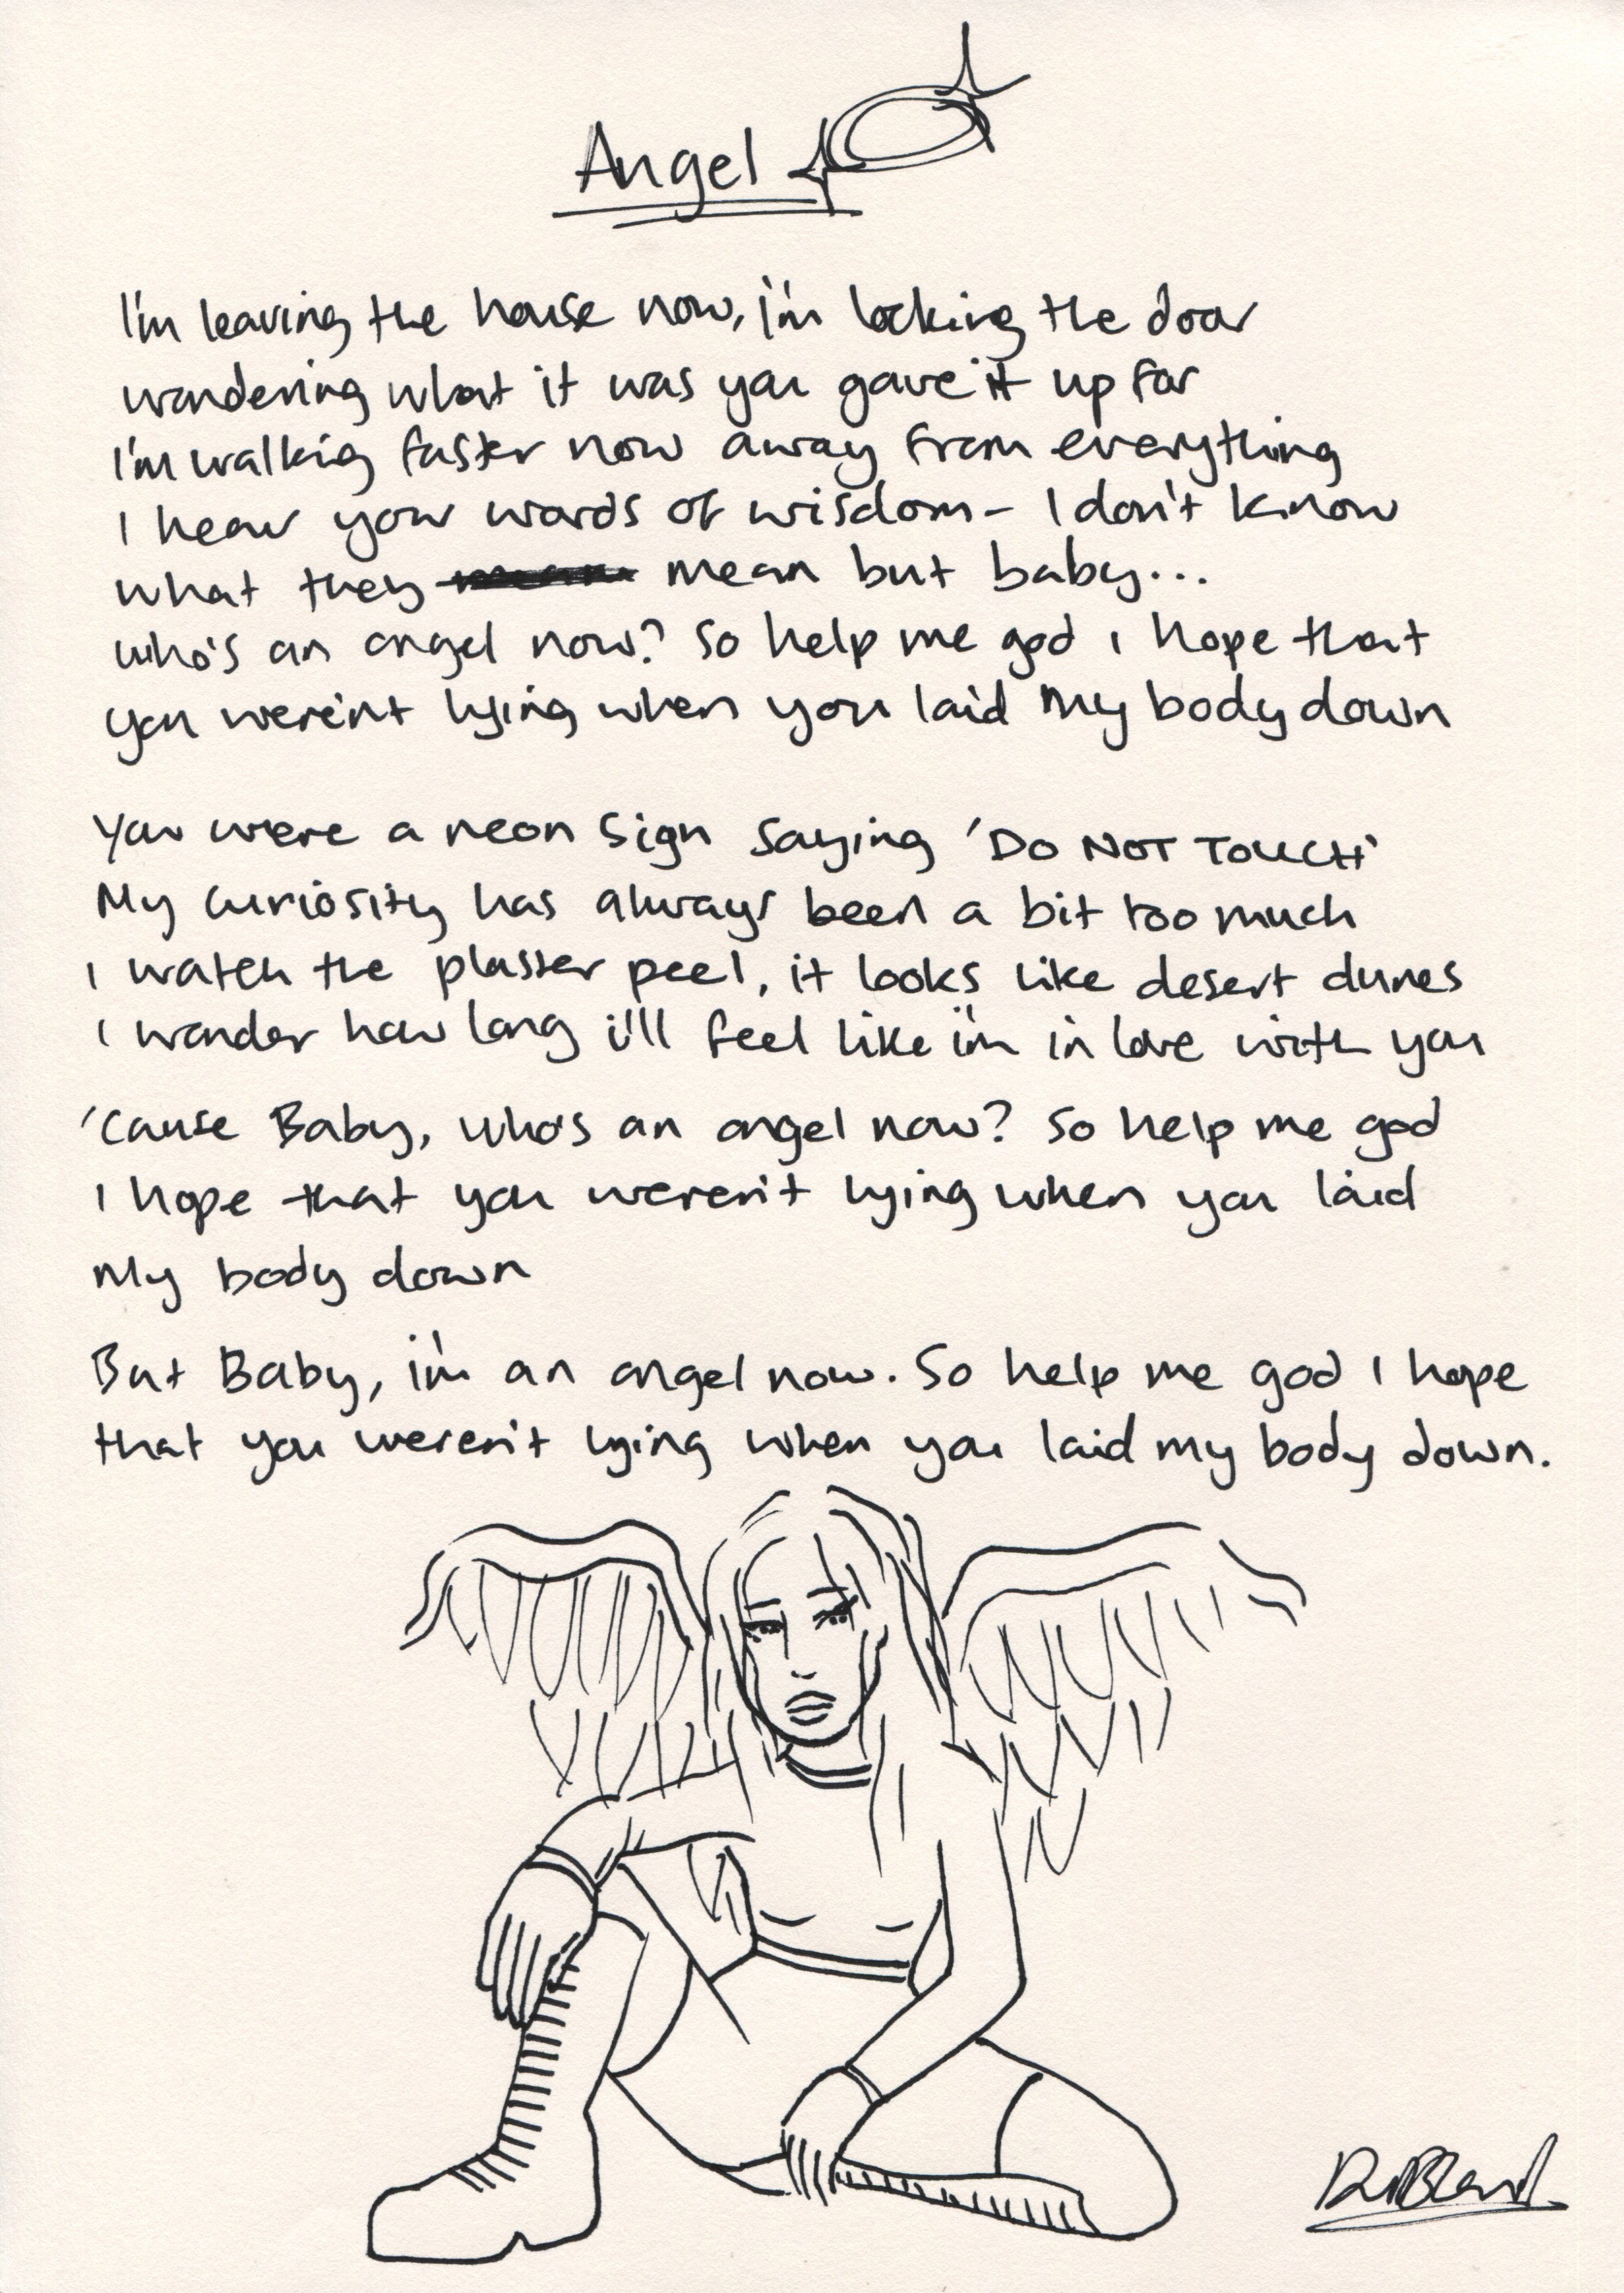 ‘Angel' - Hand written lyrics and illustration